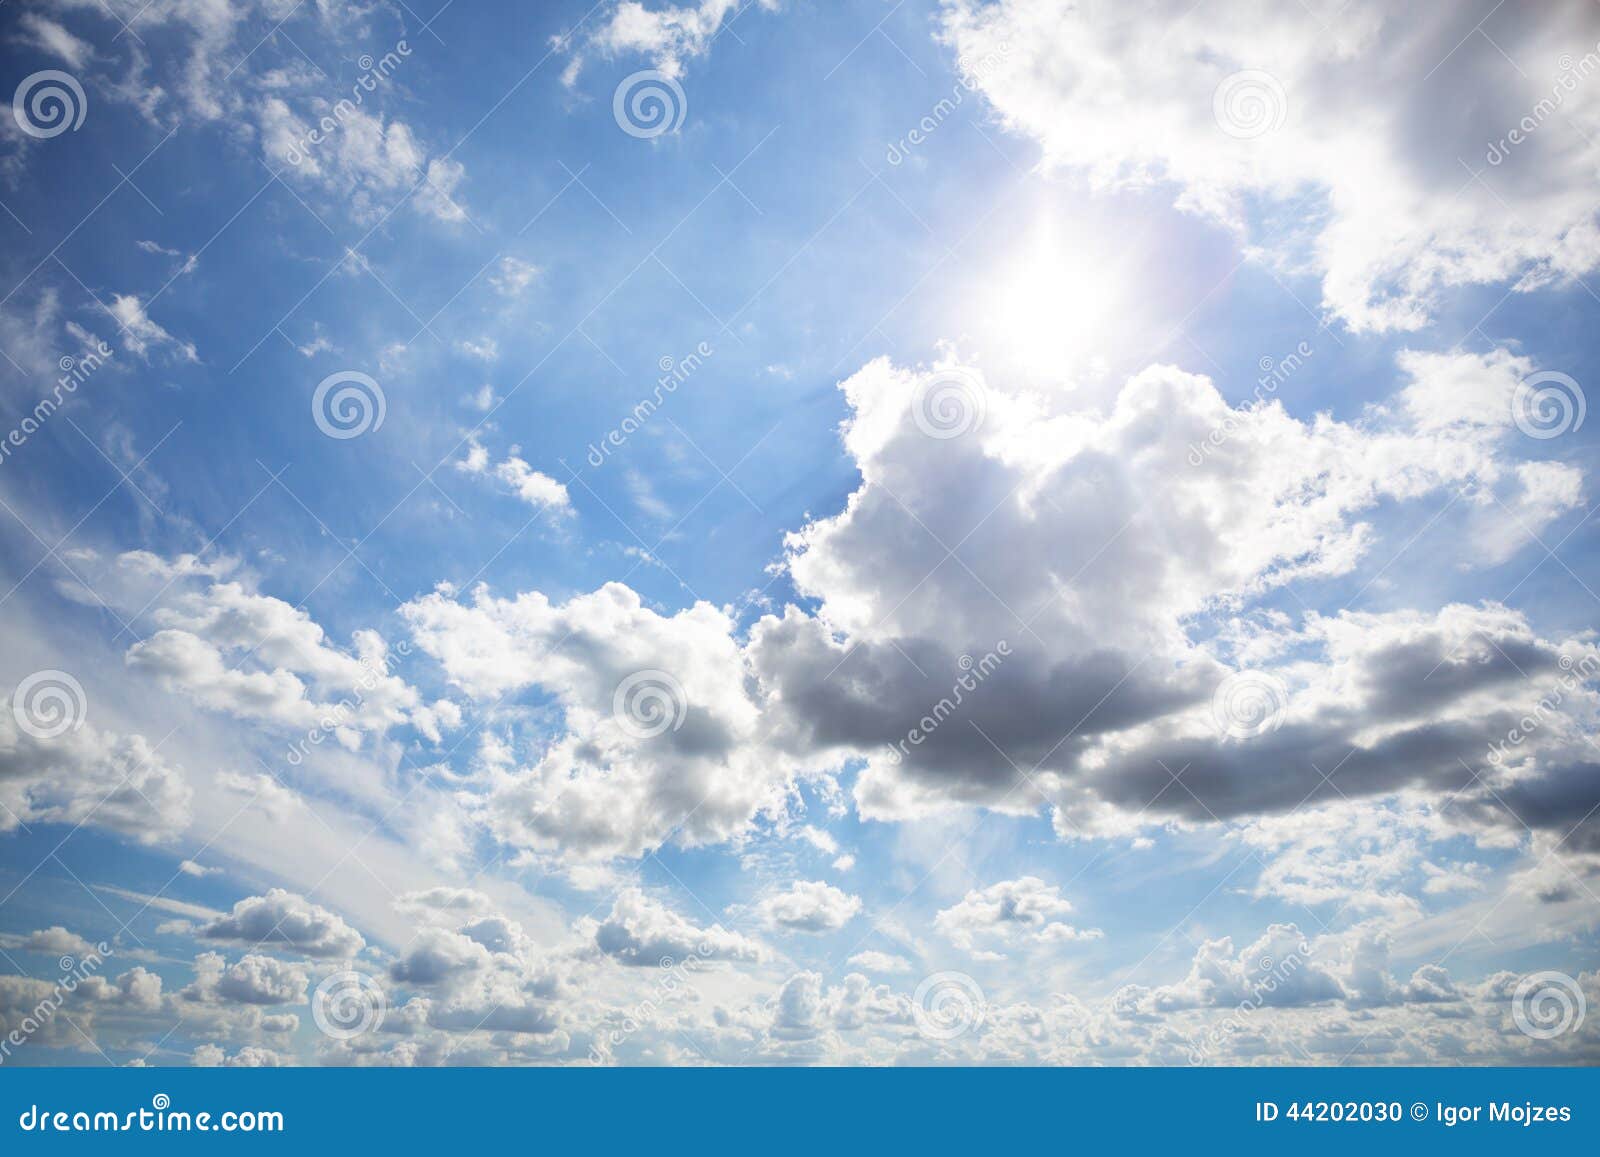 clouds on sunny sky